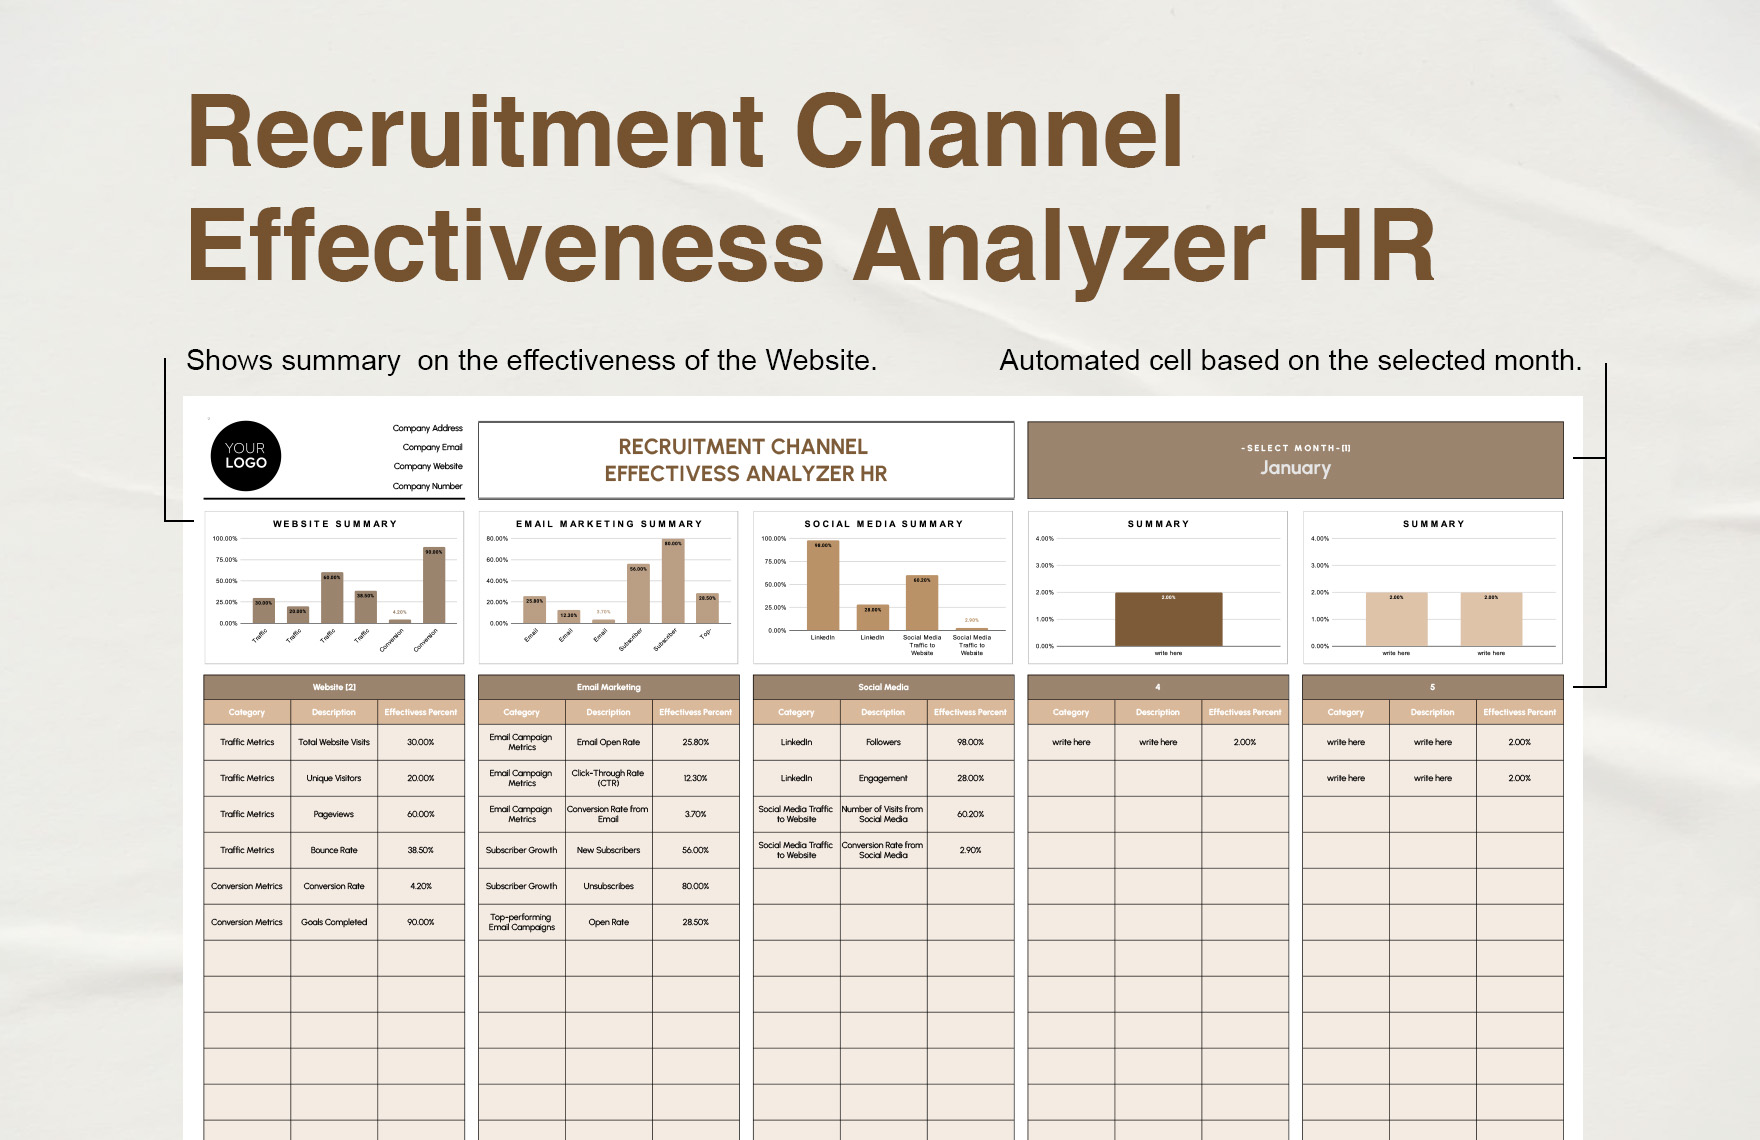 Recruitment Channel Effectiveness Analyzer  HR Template